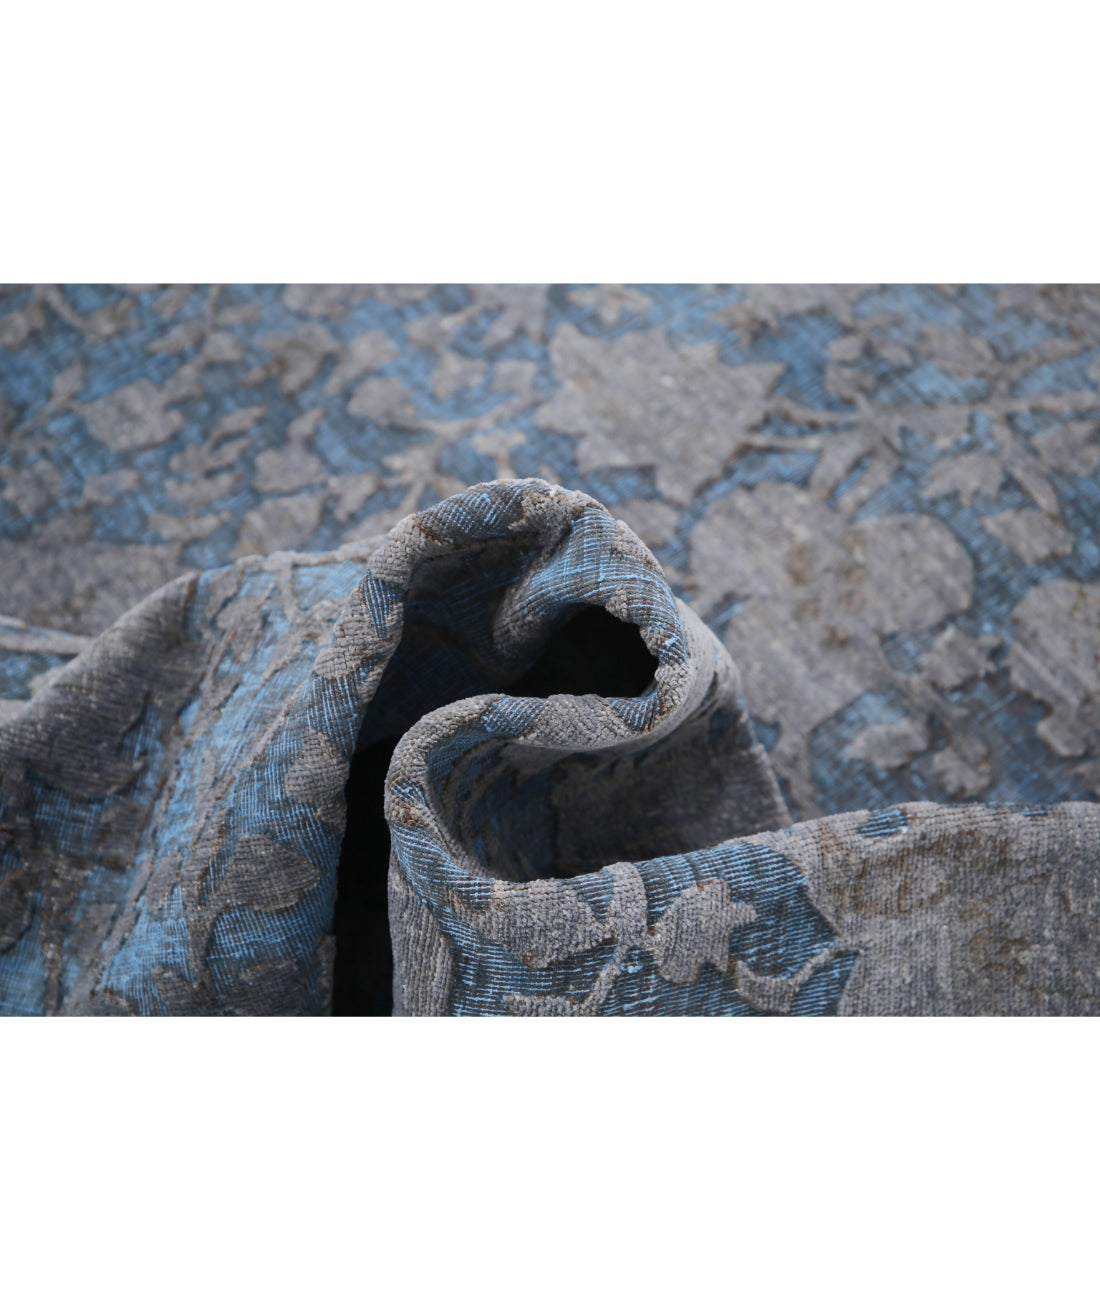 Hand Knotted Onyx Wool Rug - 6'0'' x 6'1'' 6'0'' x 6'1'' (180 X 183) / Grey / Blue